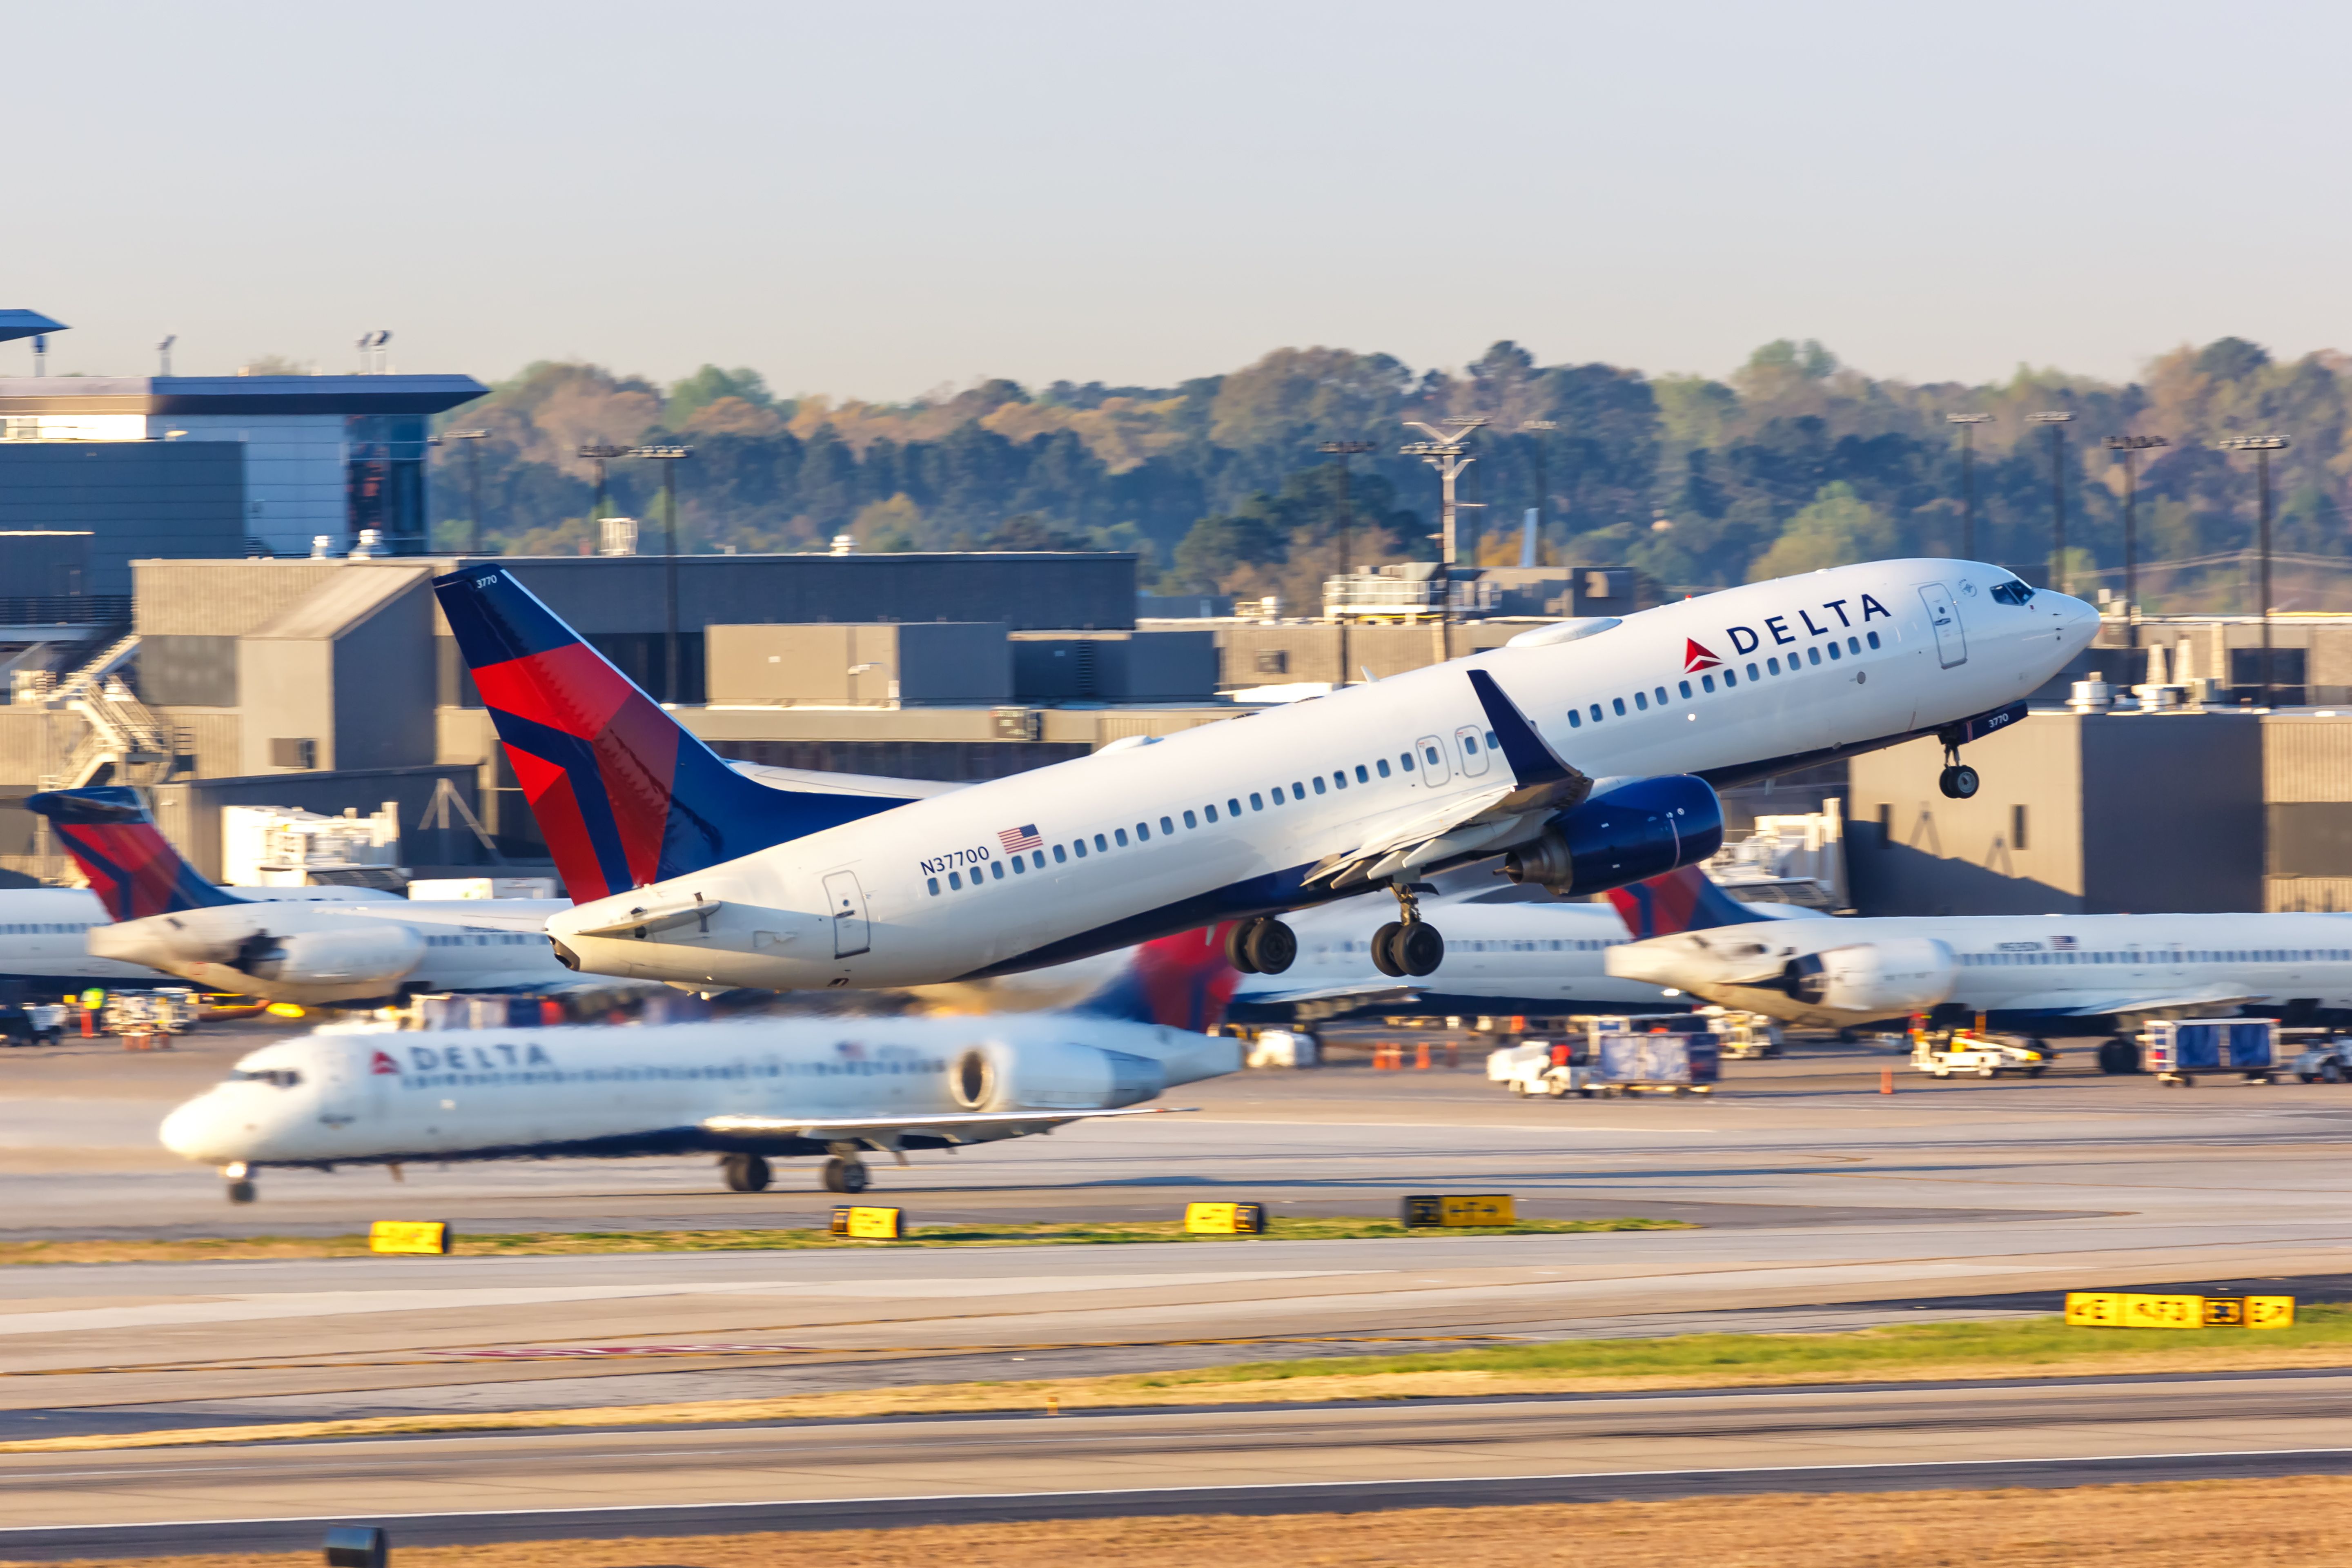 Delta Air Lines Boeing 737 at Atlanta Airport